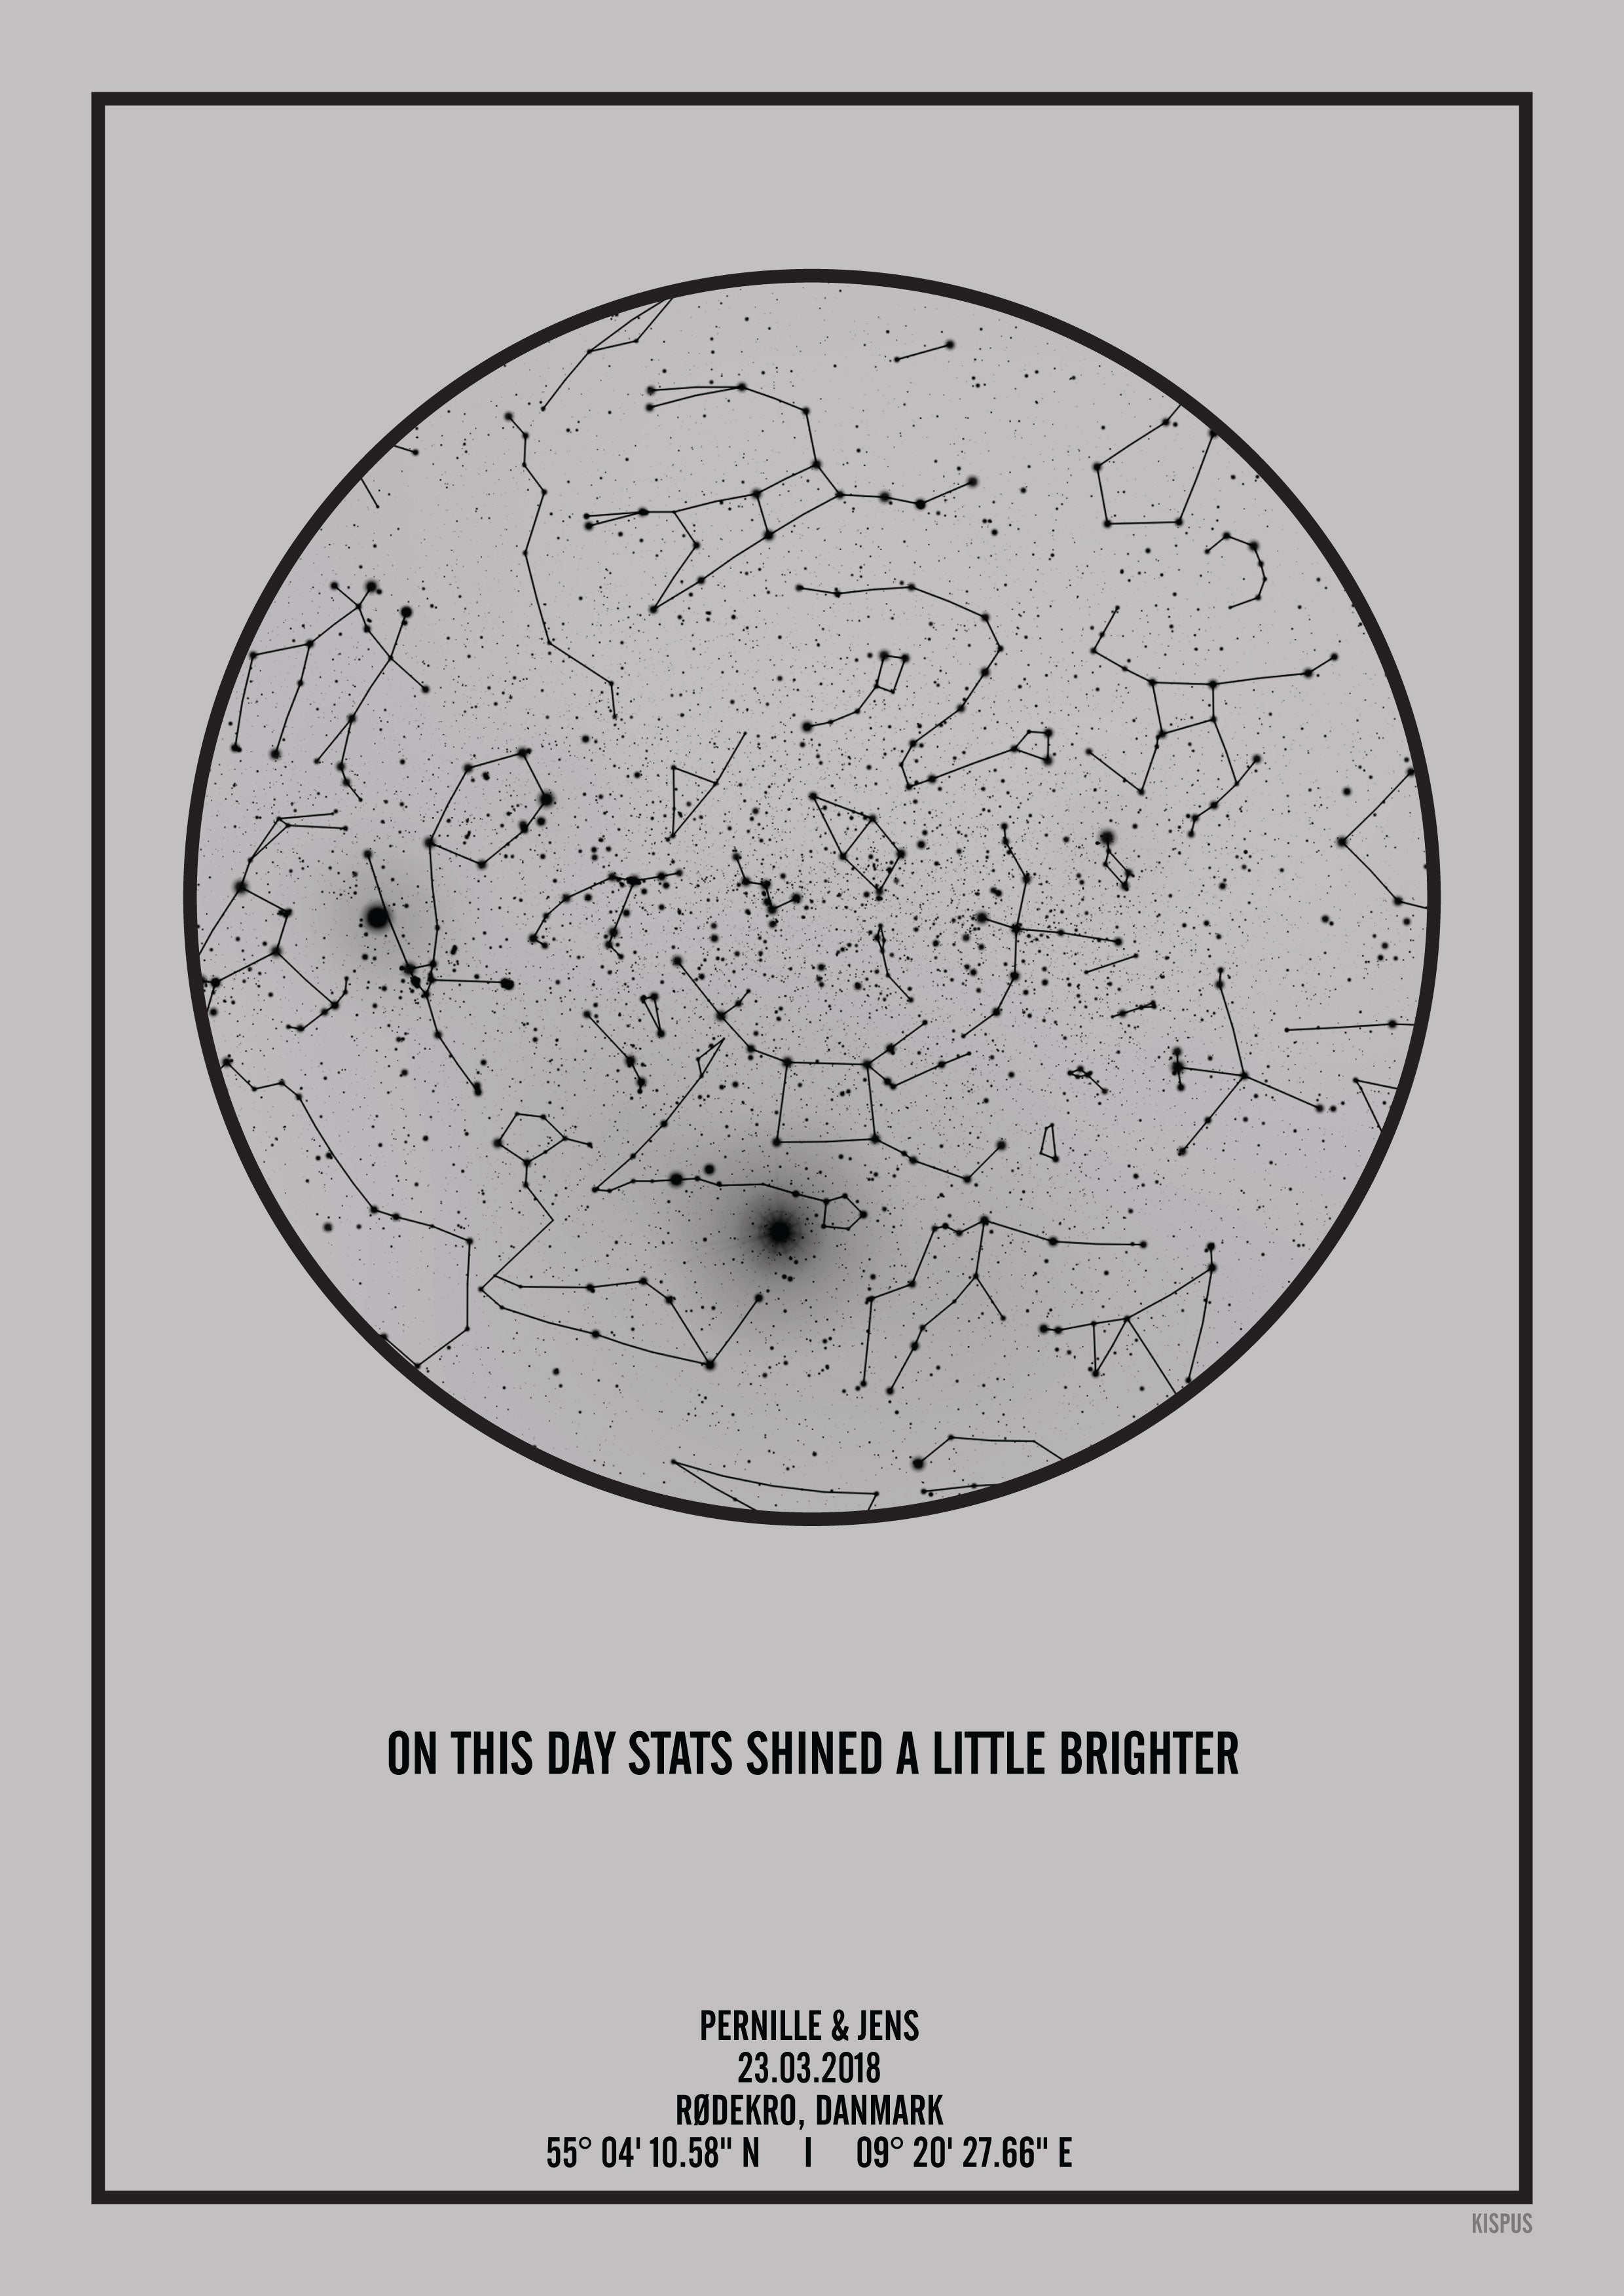 Se PERSONLIG STJERNEHIMMEL PLAKAT (LYSEGRÅ) - A4 / Sort tekst + grå stjernehimmel / Stjernehimmel med Stjernebilleder hos KISPUS